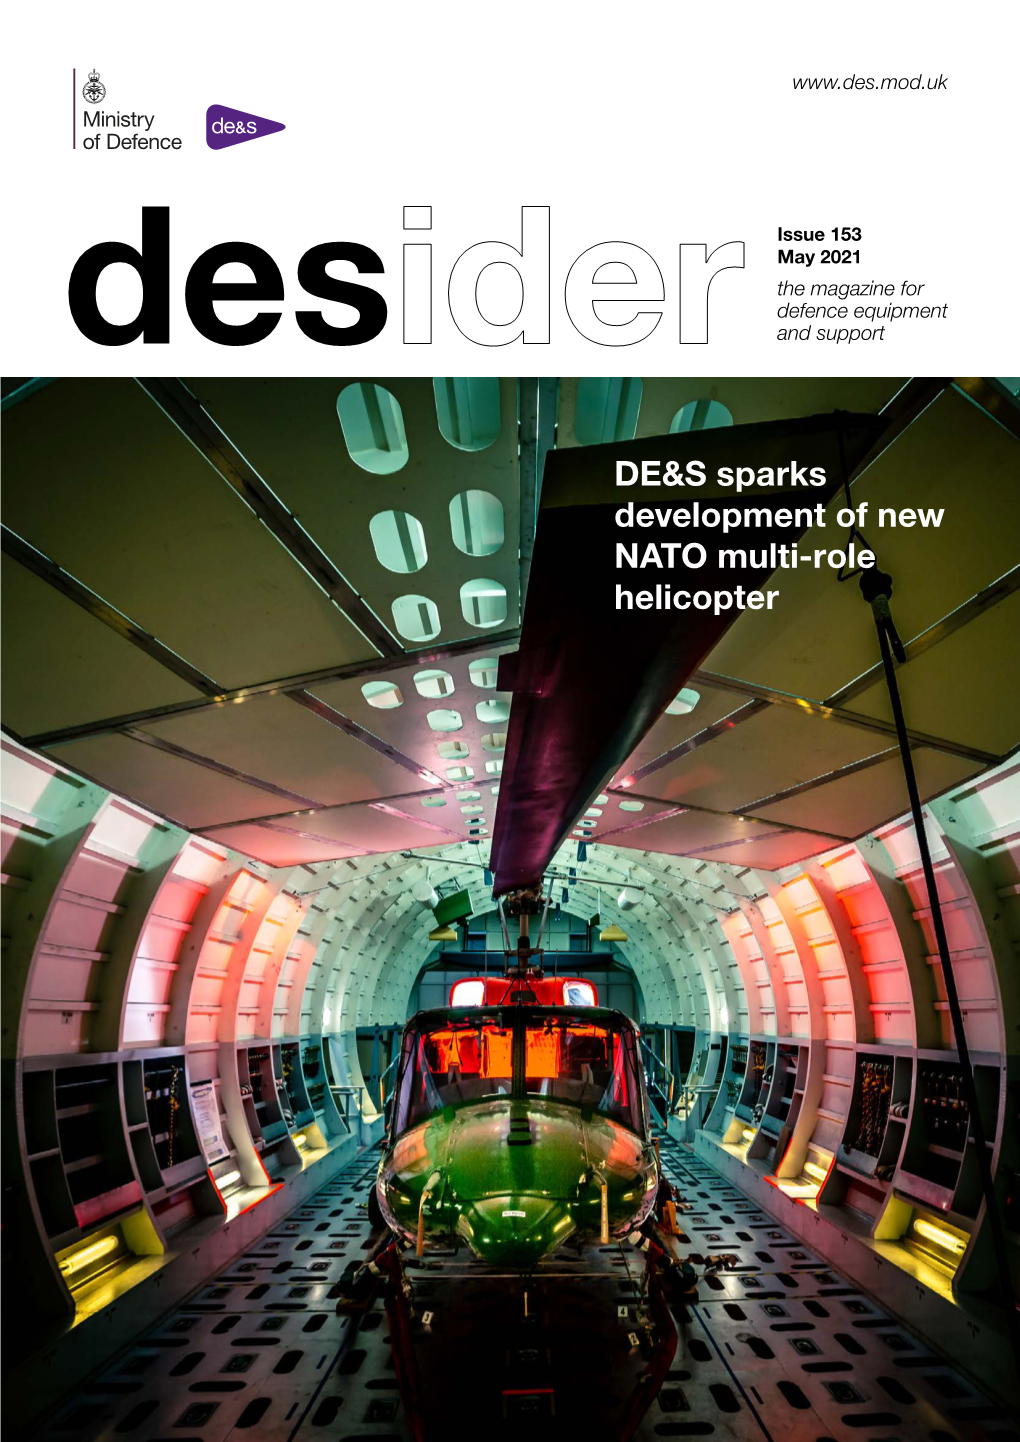 DE&S Sparks Development of New NATO Multi-Role Helicopter